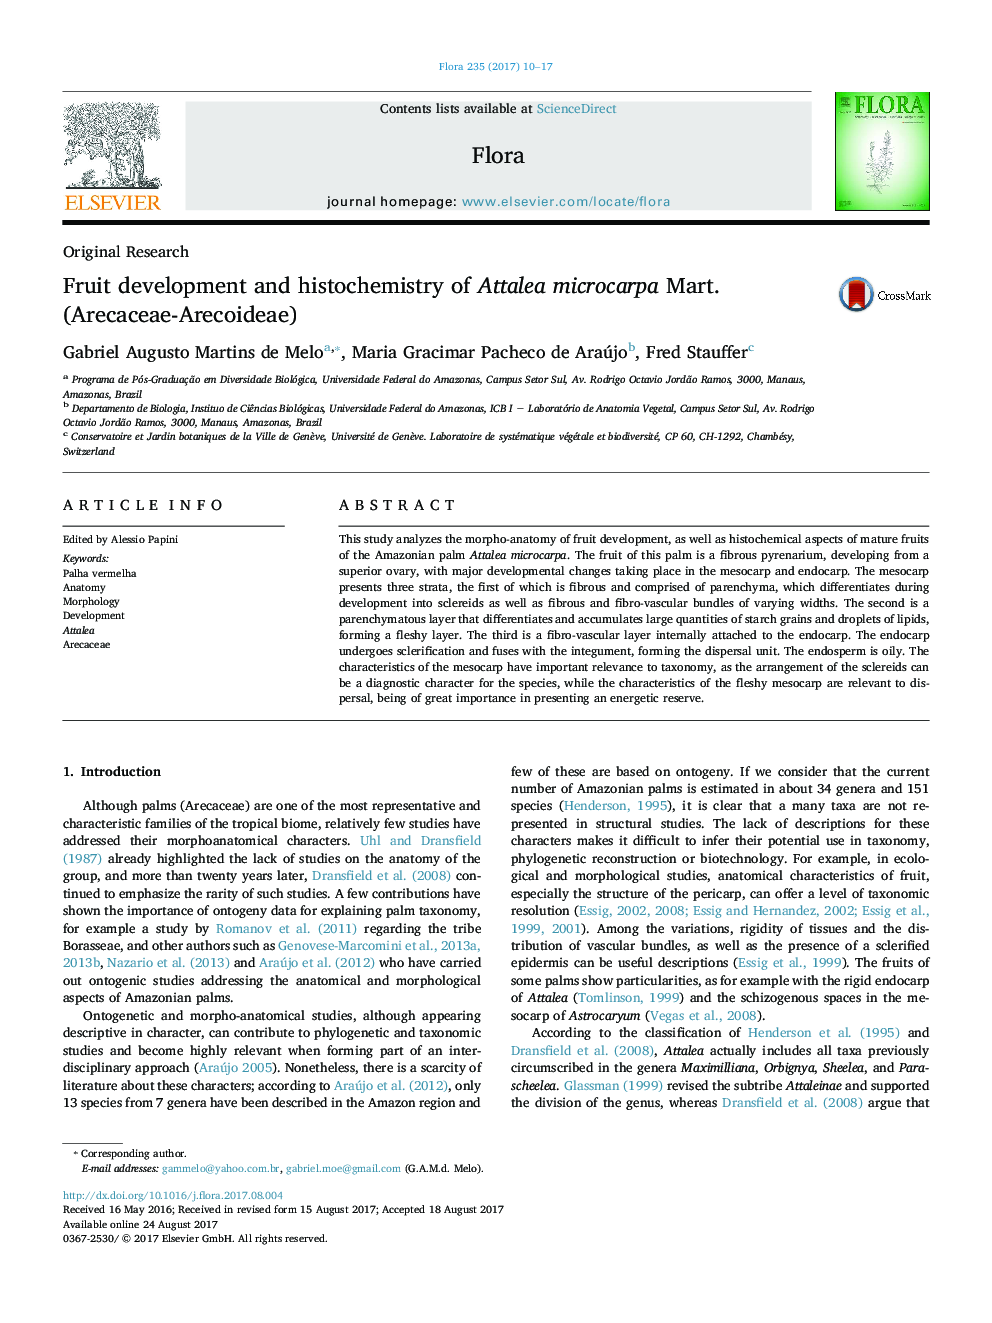 Fruit development and histochemistry of Attalea microcarpa Mart. (Arecaceae-Arecoideae)